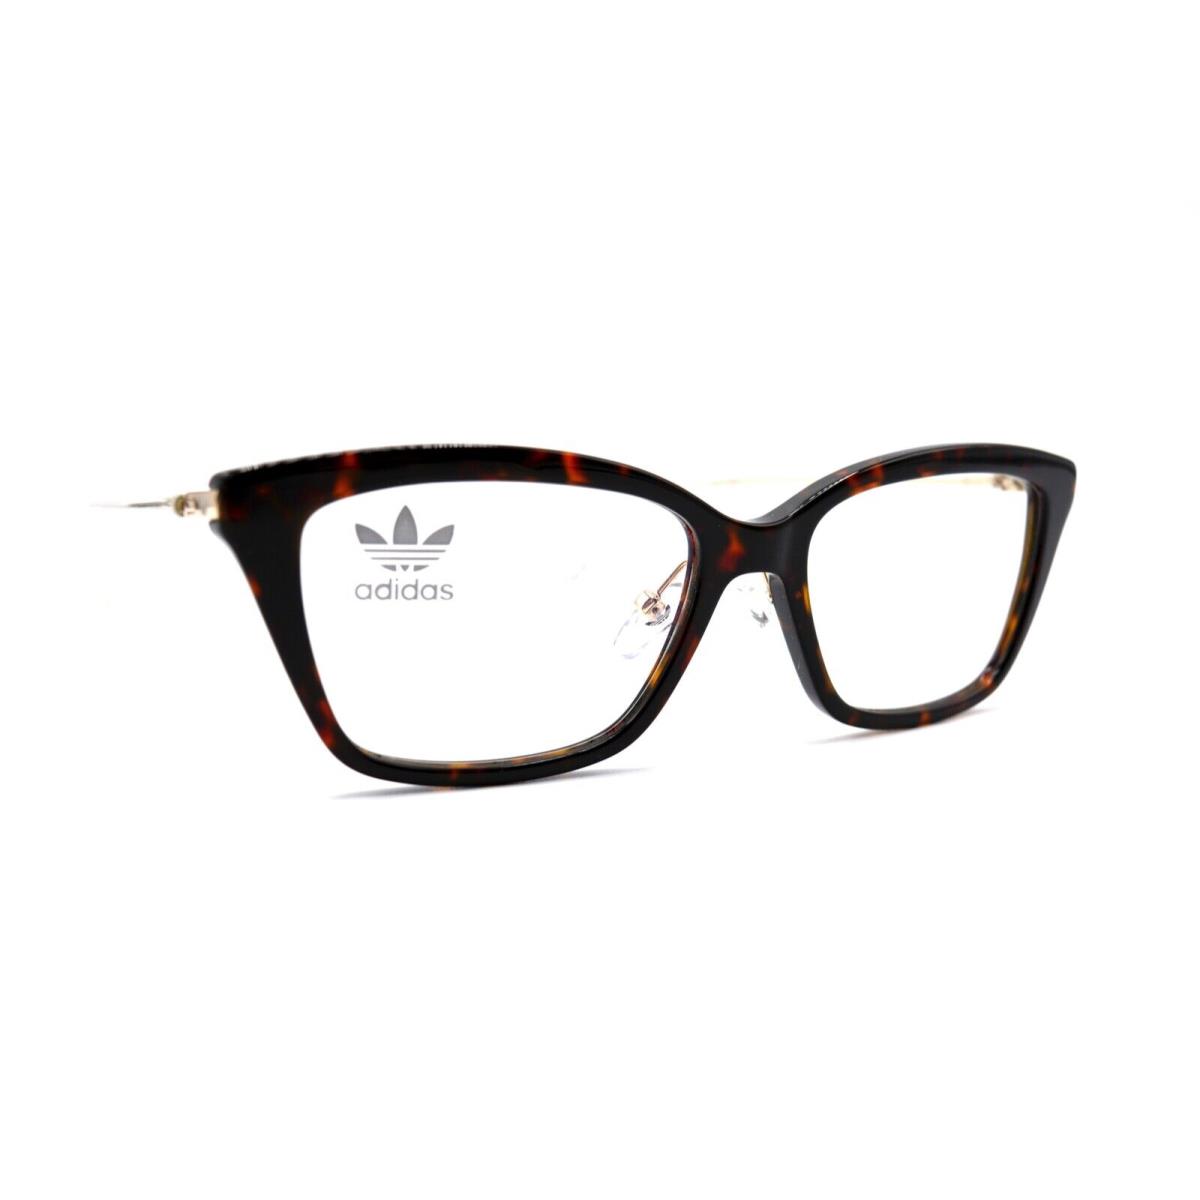 Adidas AOK008O.092.000 Dark Havana Eyeglasses Frames RX 53-16 18